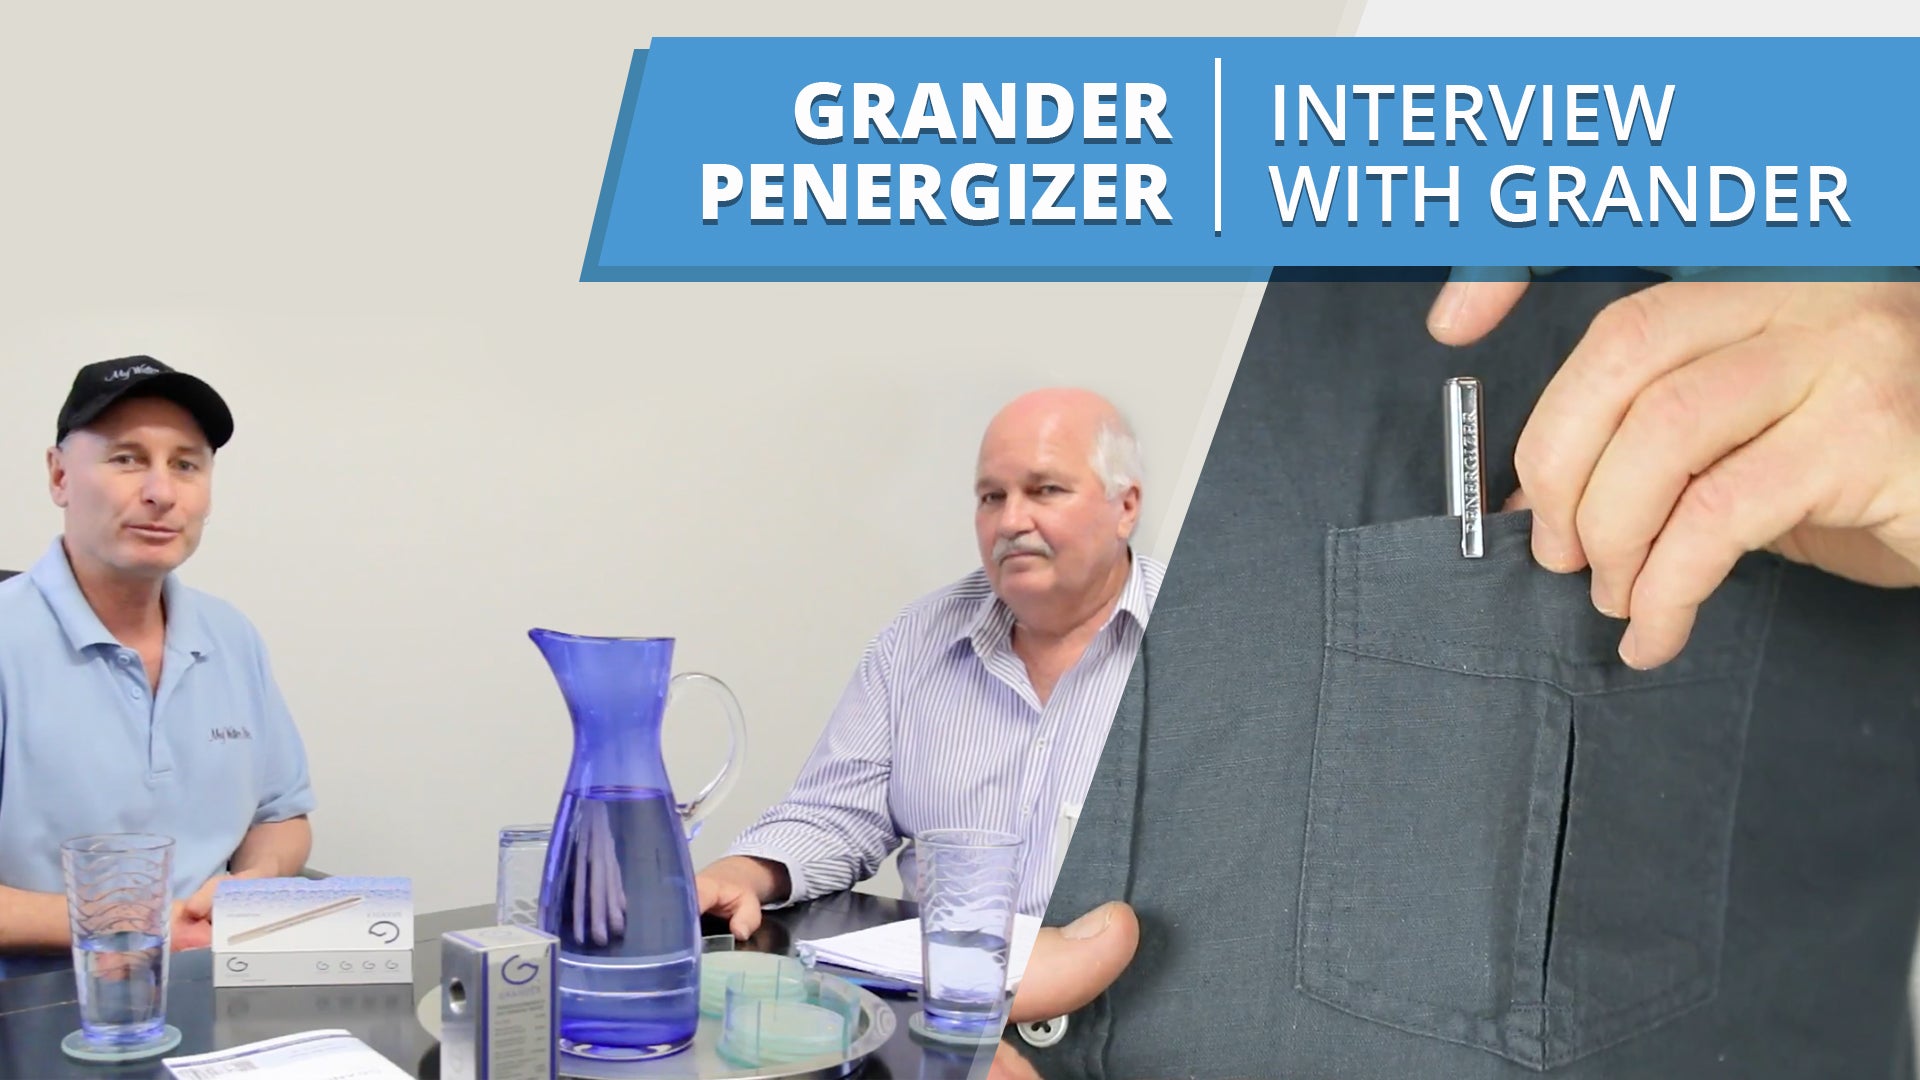 [VIDEO] Grander Penergizer - Interview with Wayne from Grander